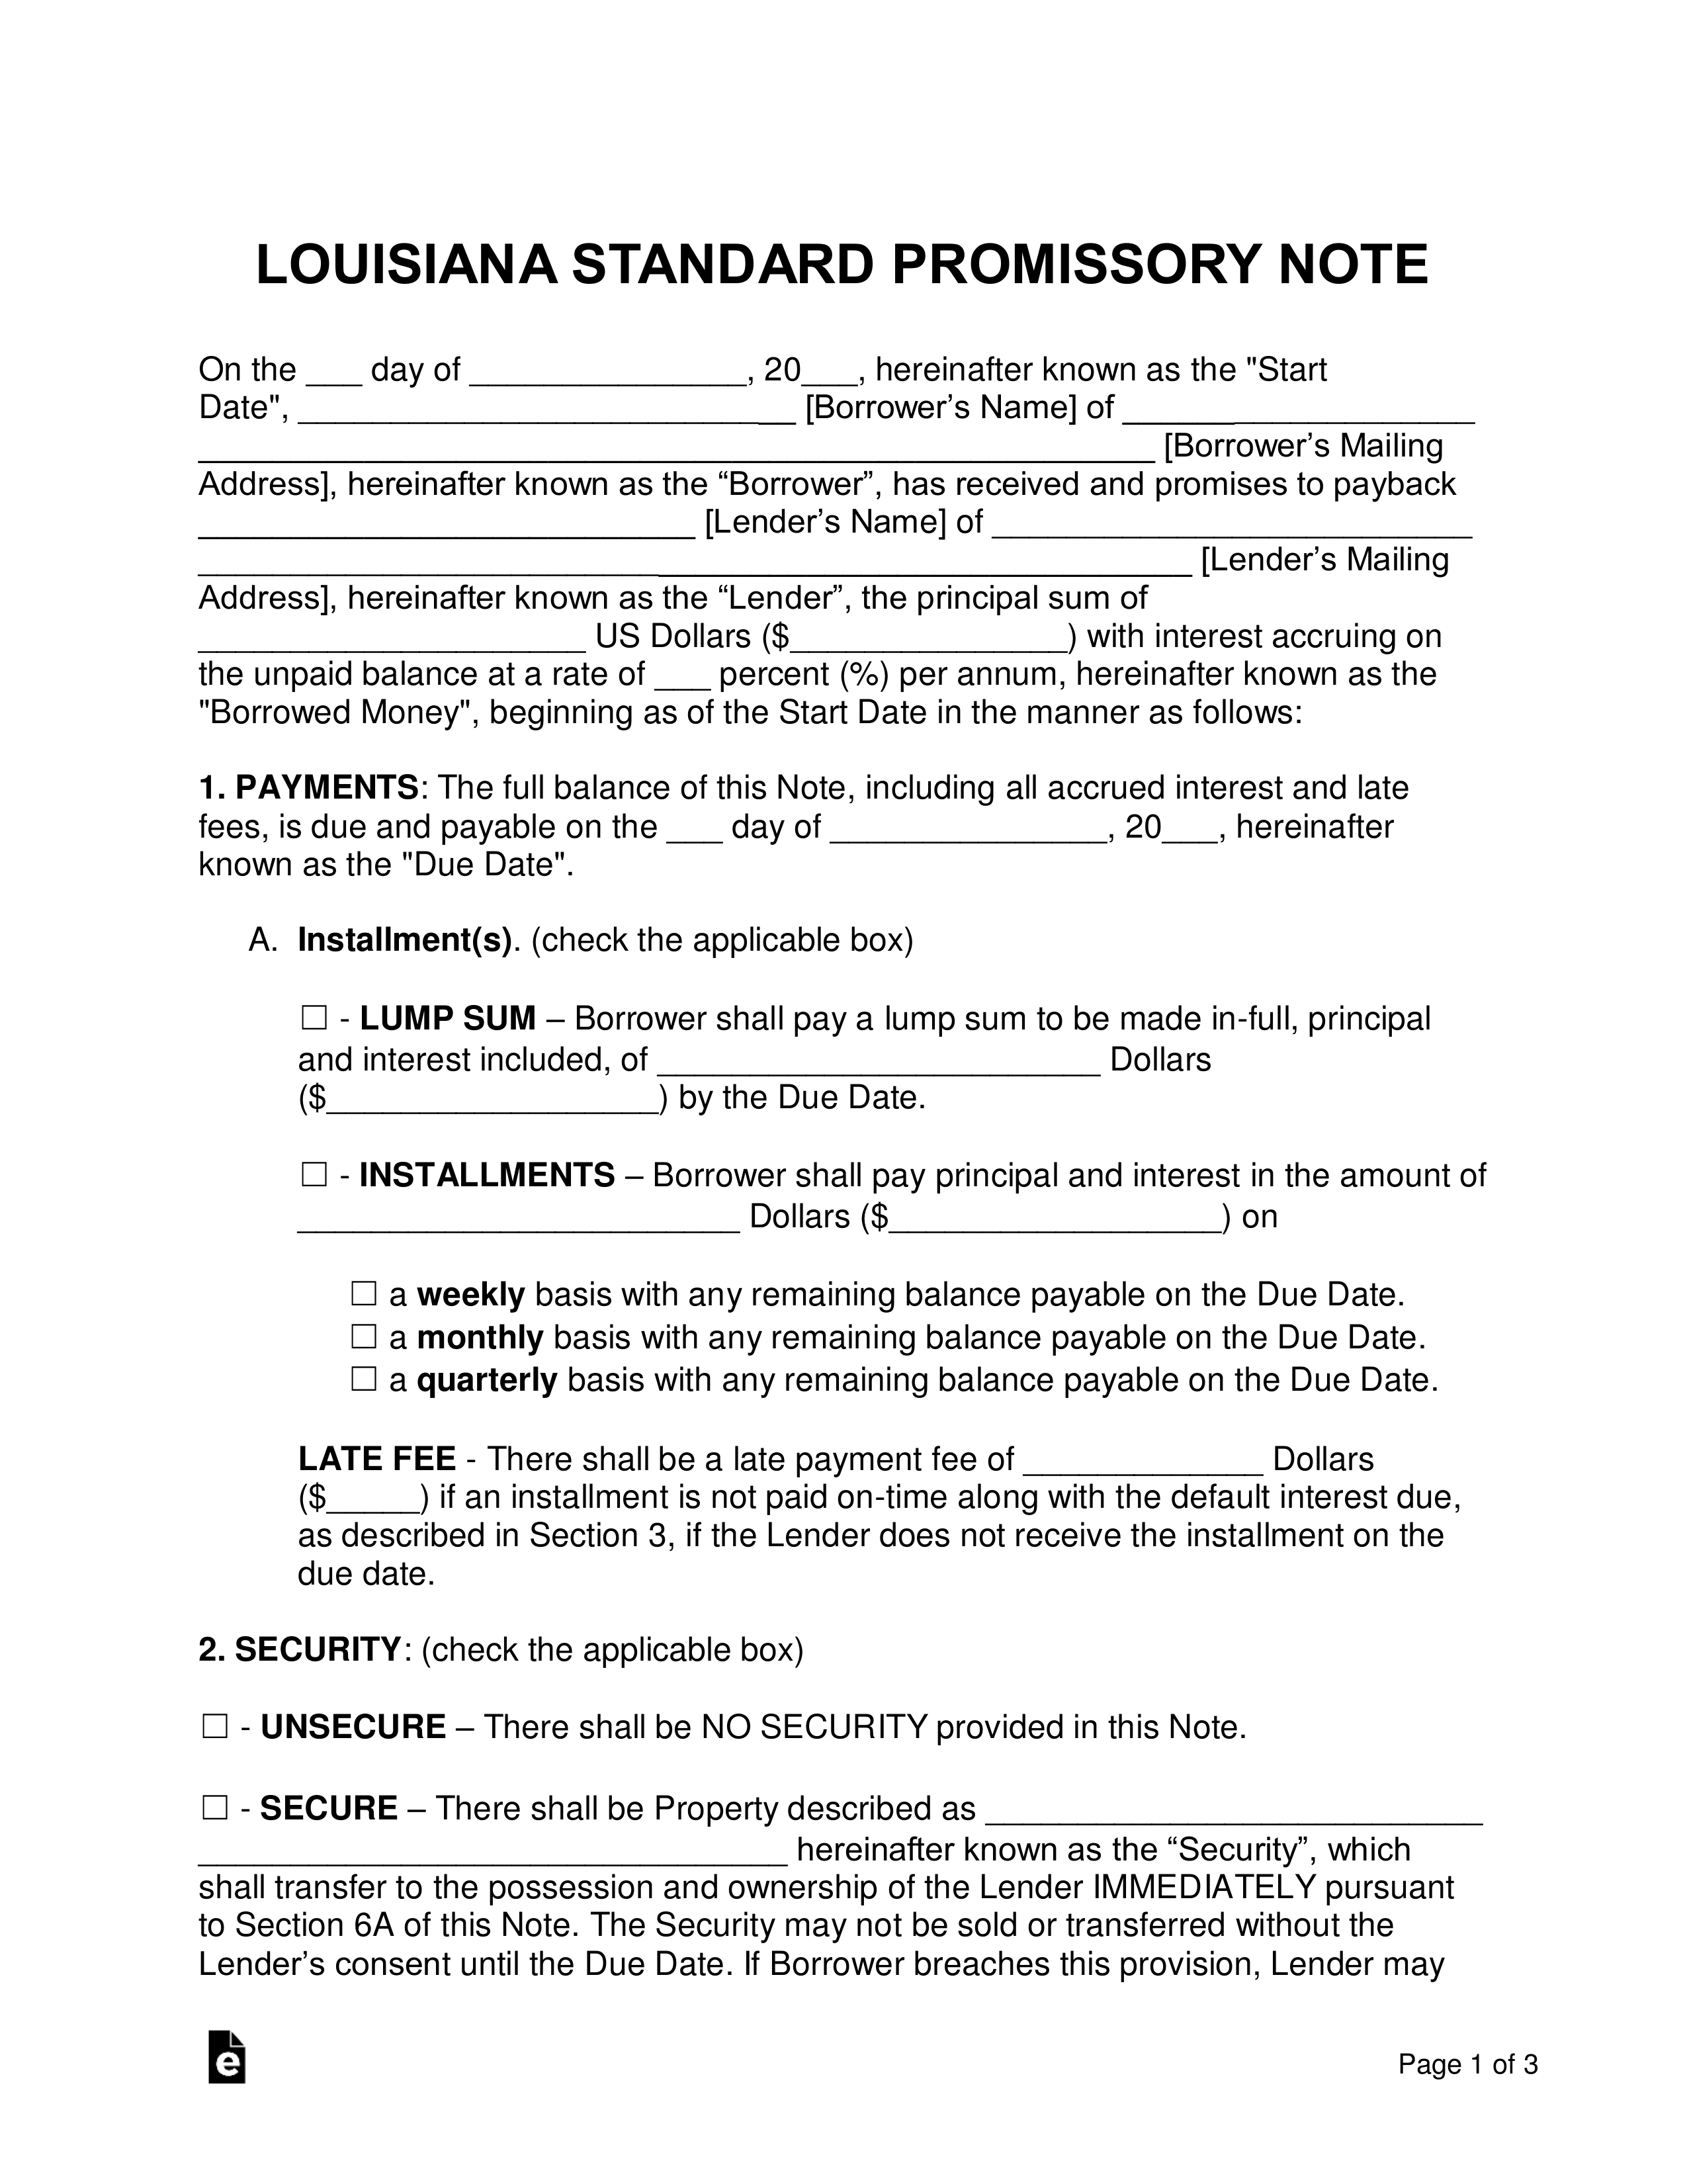 Louisiana Promissory Note Templates (2)